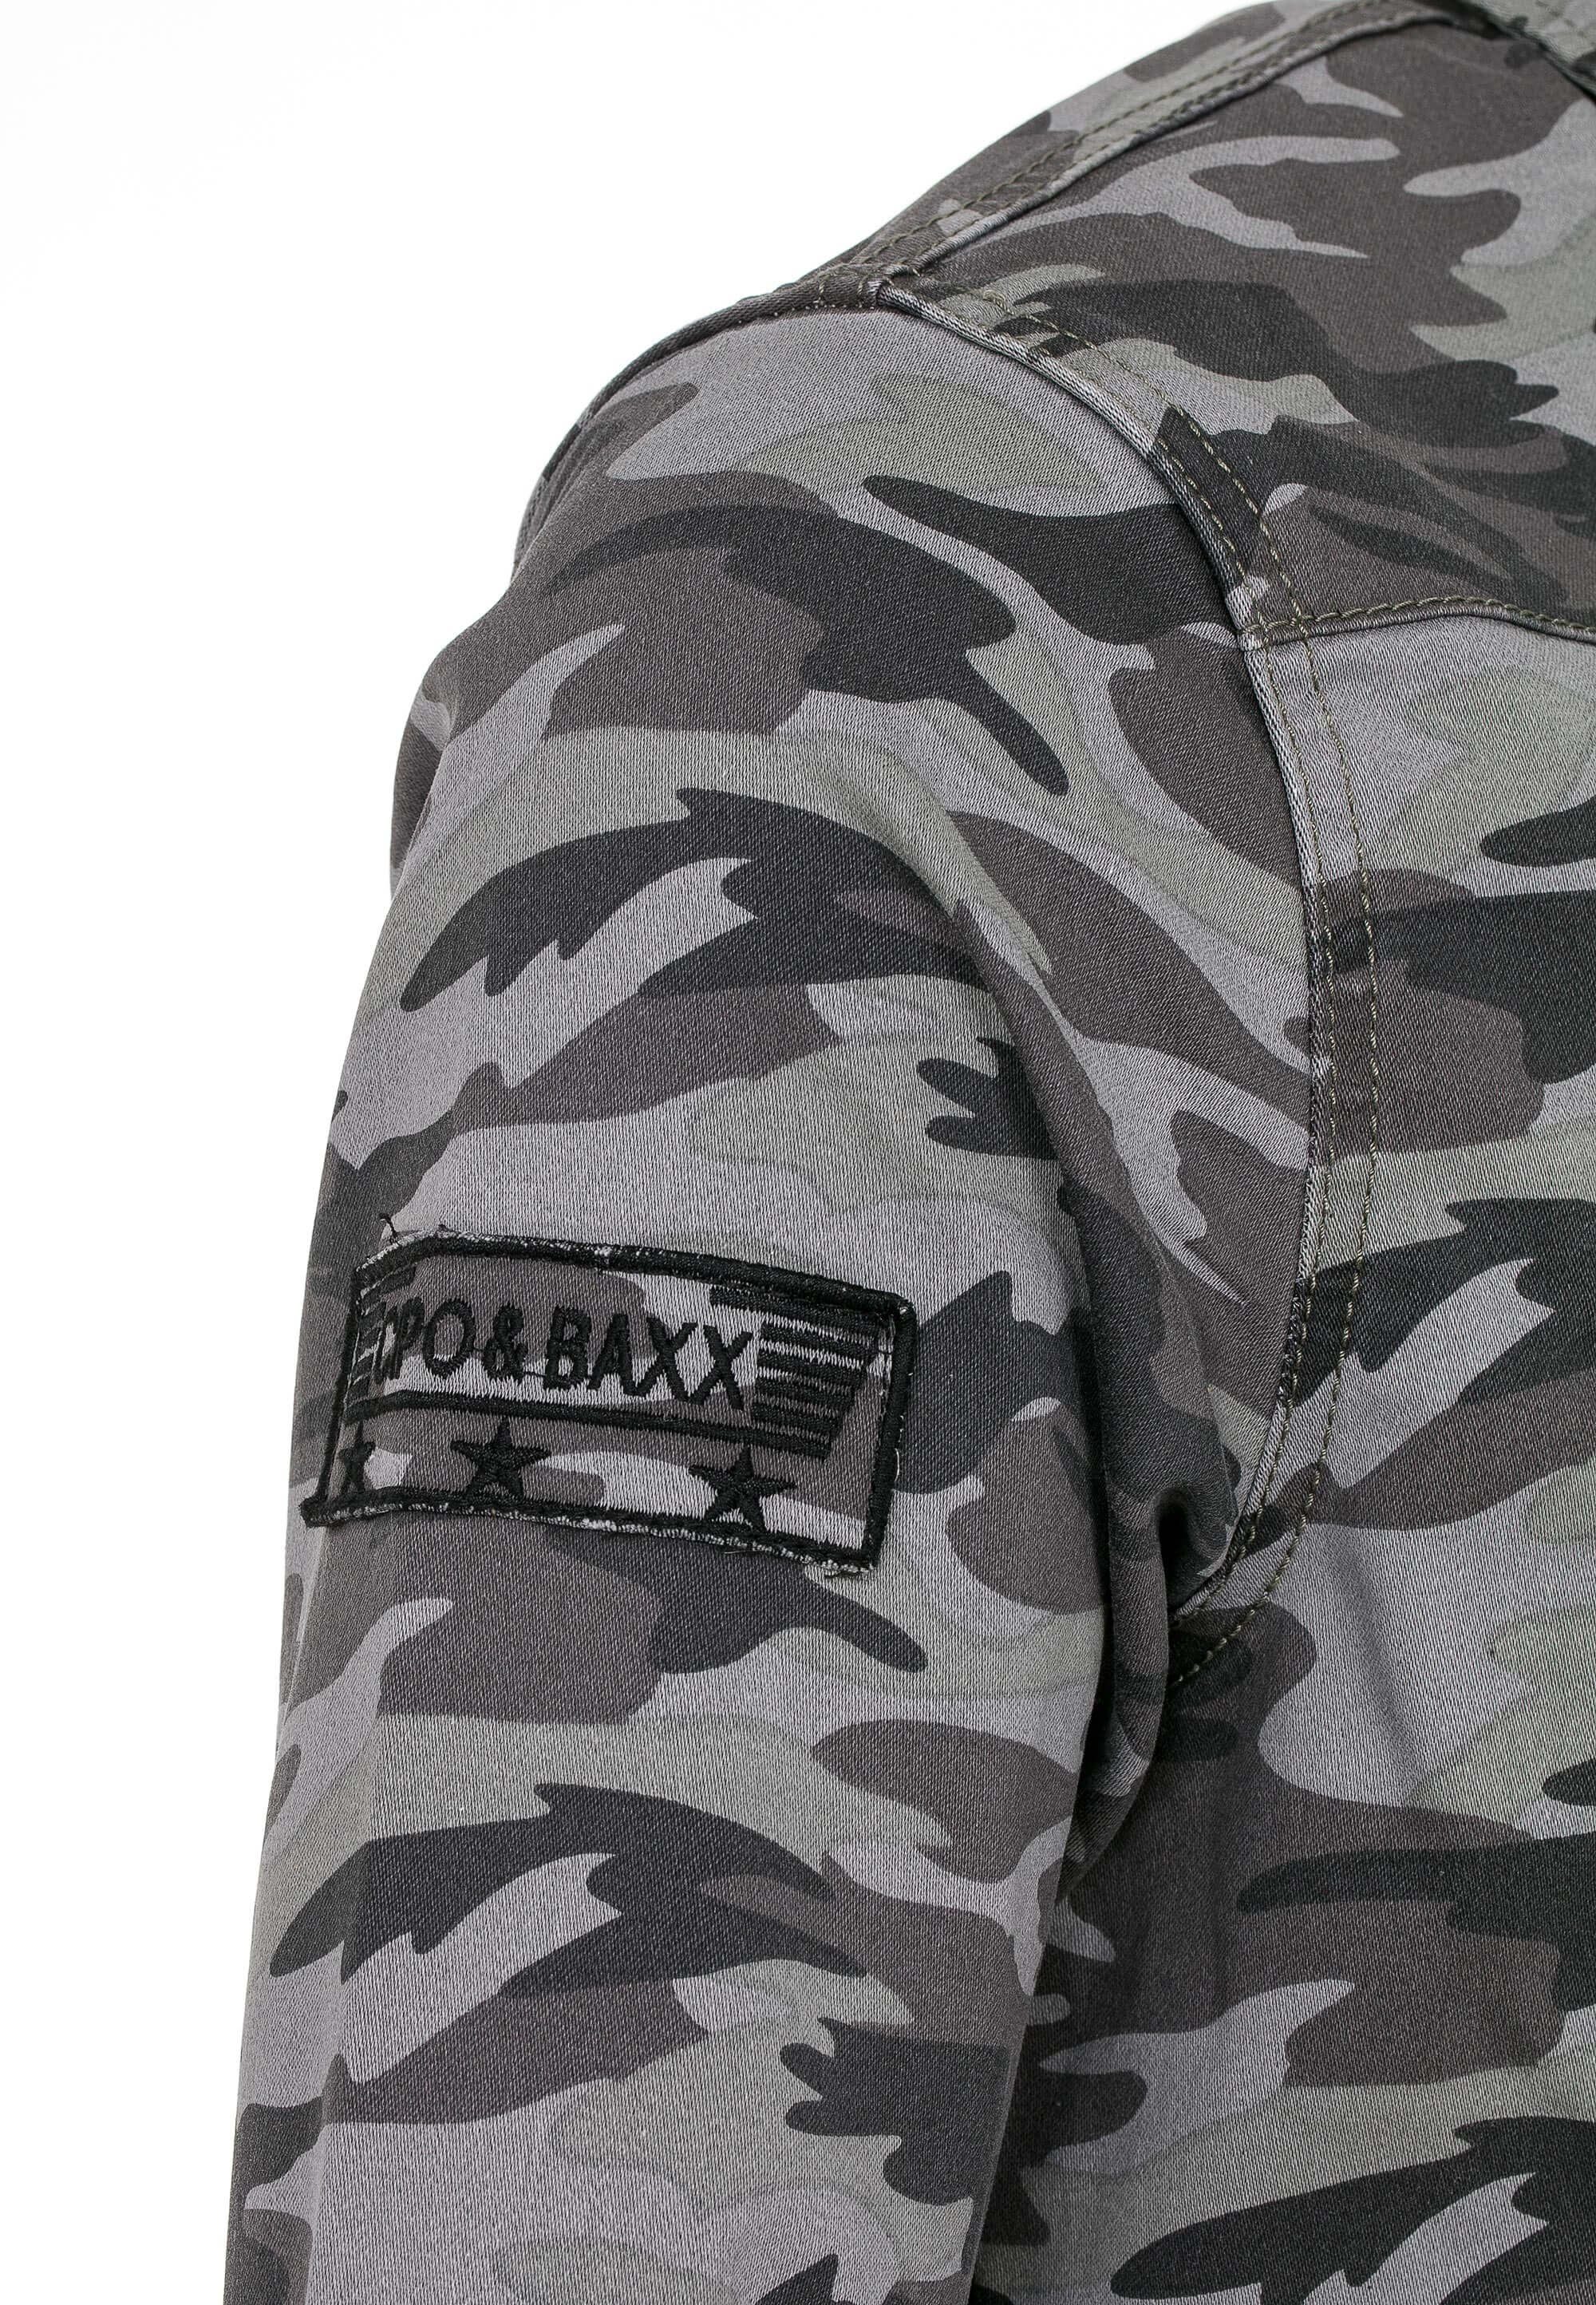 Markenaufnäher & Baxx Cipo grau-mehrfarbig Langarmshirt mit